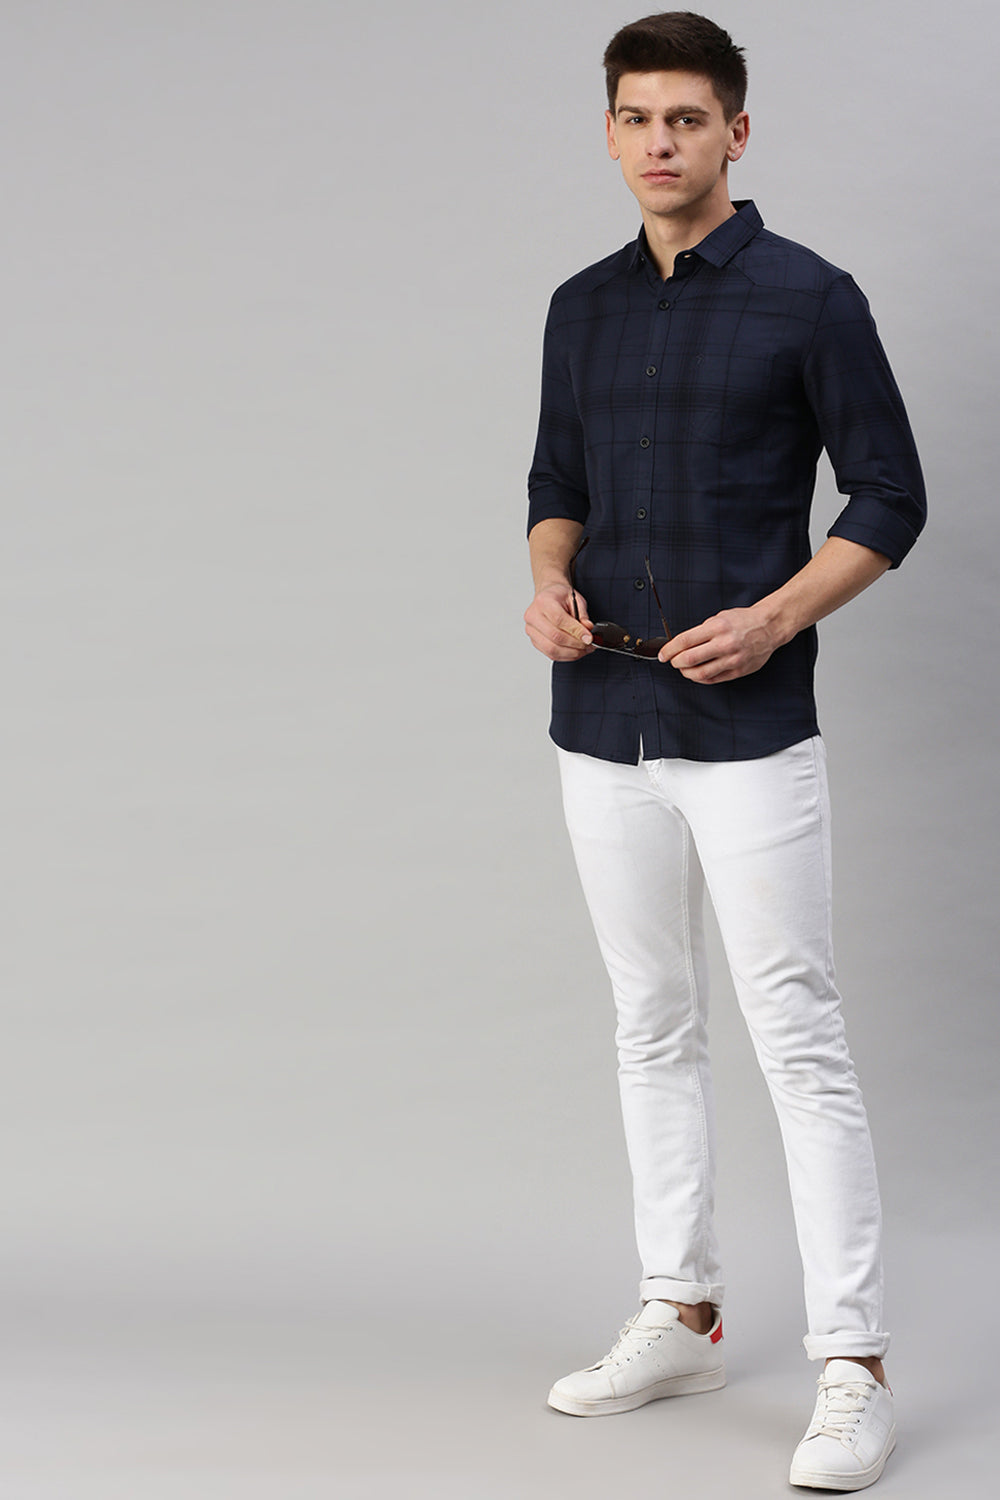 CP BRO Men's Cotton Full Sleeve Checked Slim Fit Collar Neck Navy Color Woven Shirt | Sbo1-44 B